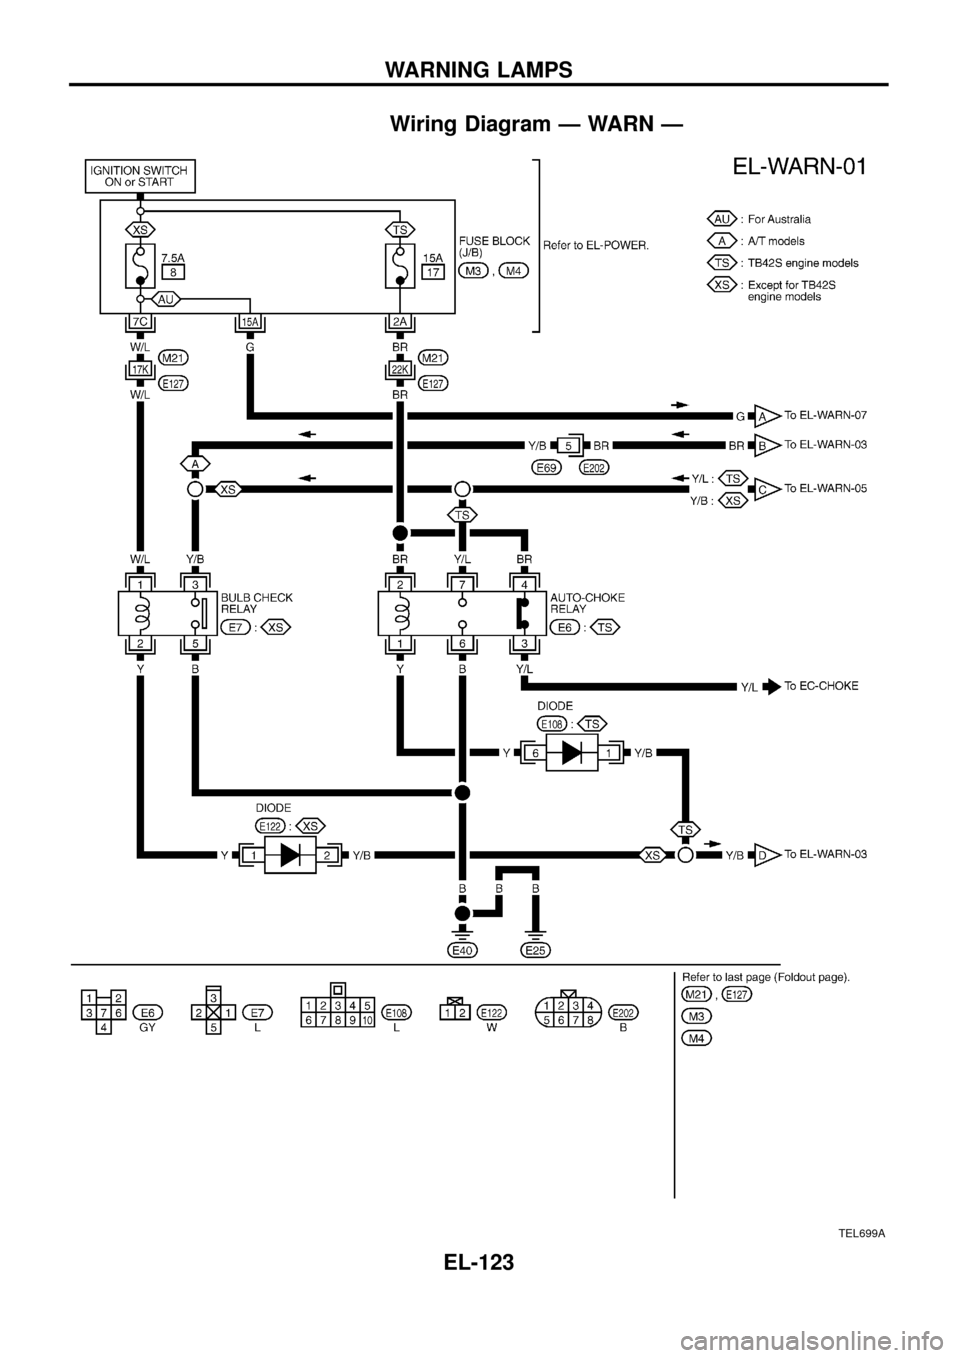 NISSAN PATROL 1998 Y61 / 5.G Electrical System User Guide Wiring Diagram Ð WARN Ð
TEL699A
WARNING LAMPS
EL-123 